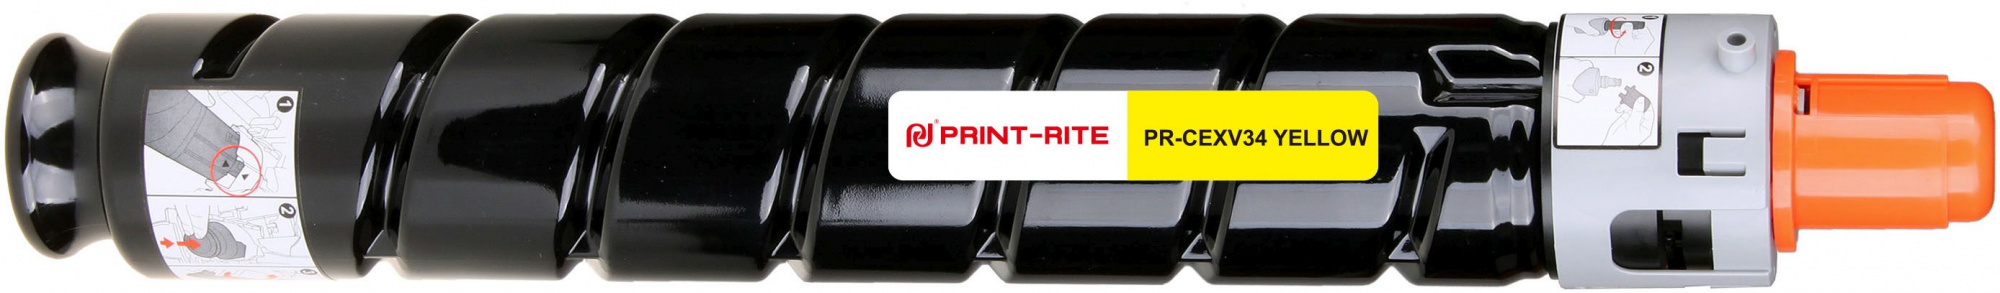   Print-Rite TFC390YPRJ PR-CEXV34 YELLOW C-EXV34 Yellow  (19000.)  Canon IR Advance C2030L/C2030i/C2020L/C2020i/C2025i